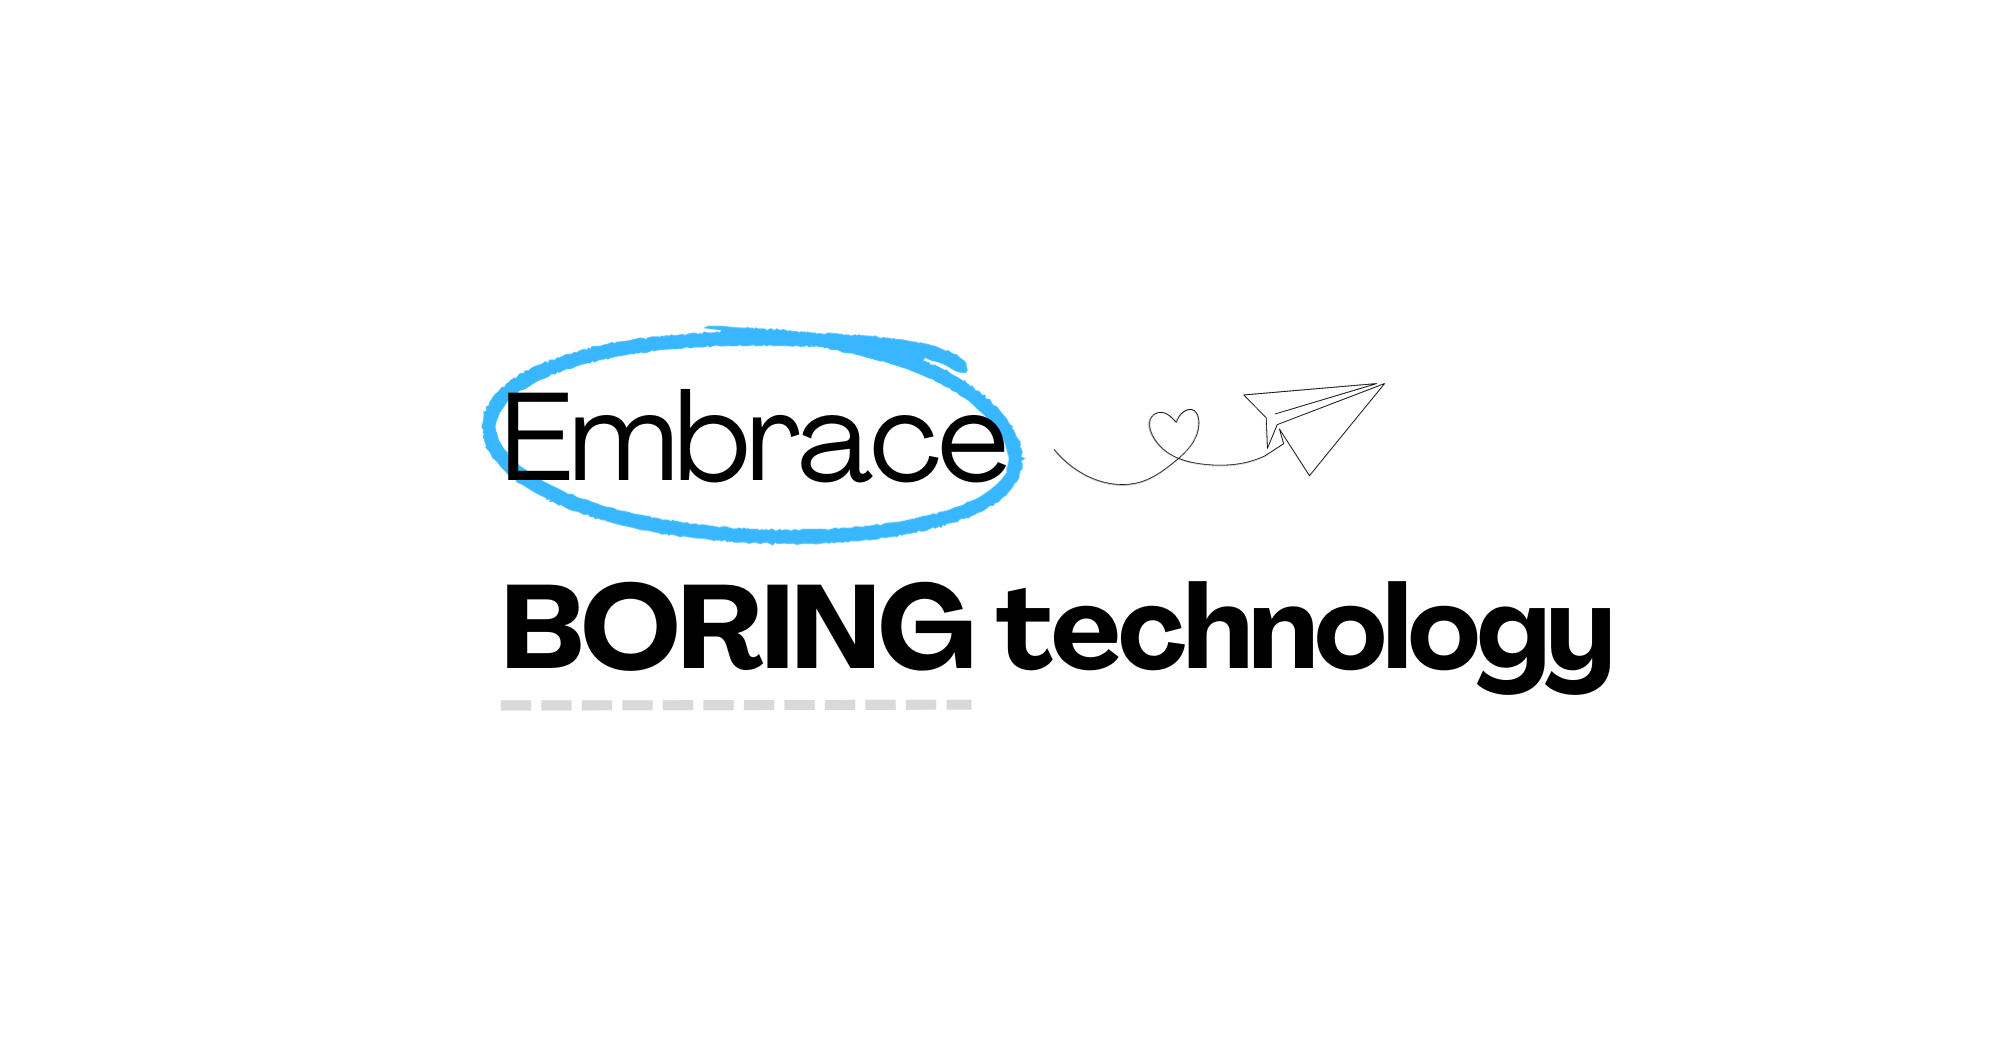 Embrace boring technology